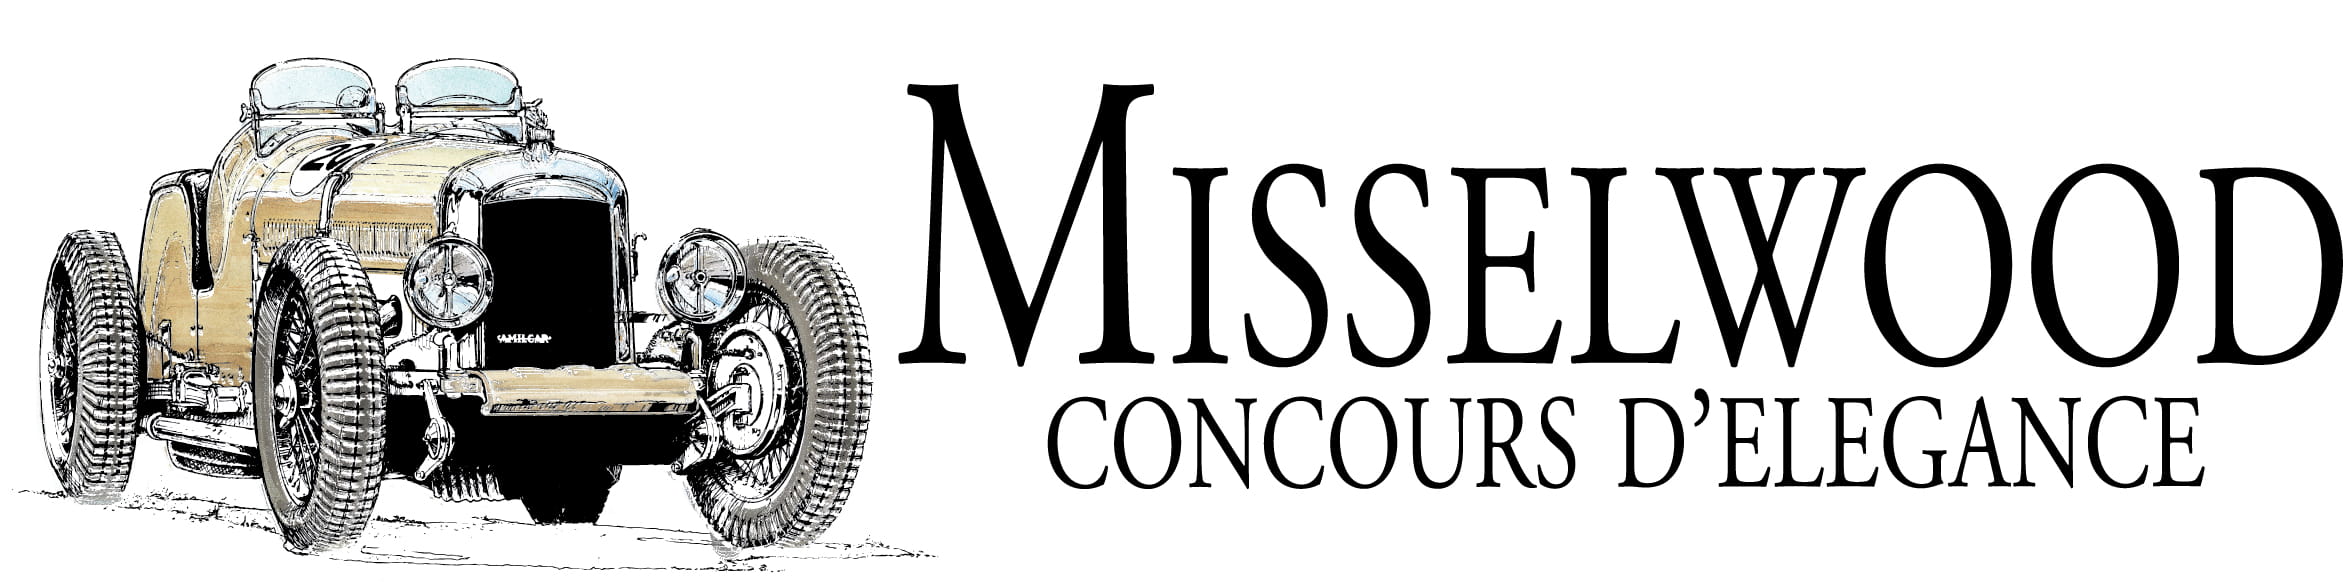 Misselwood Concours d'Elegance Logo